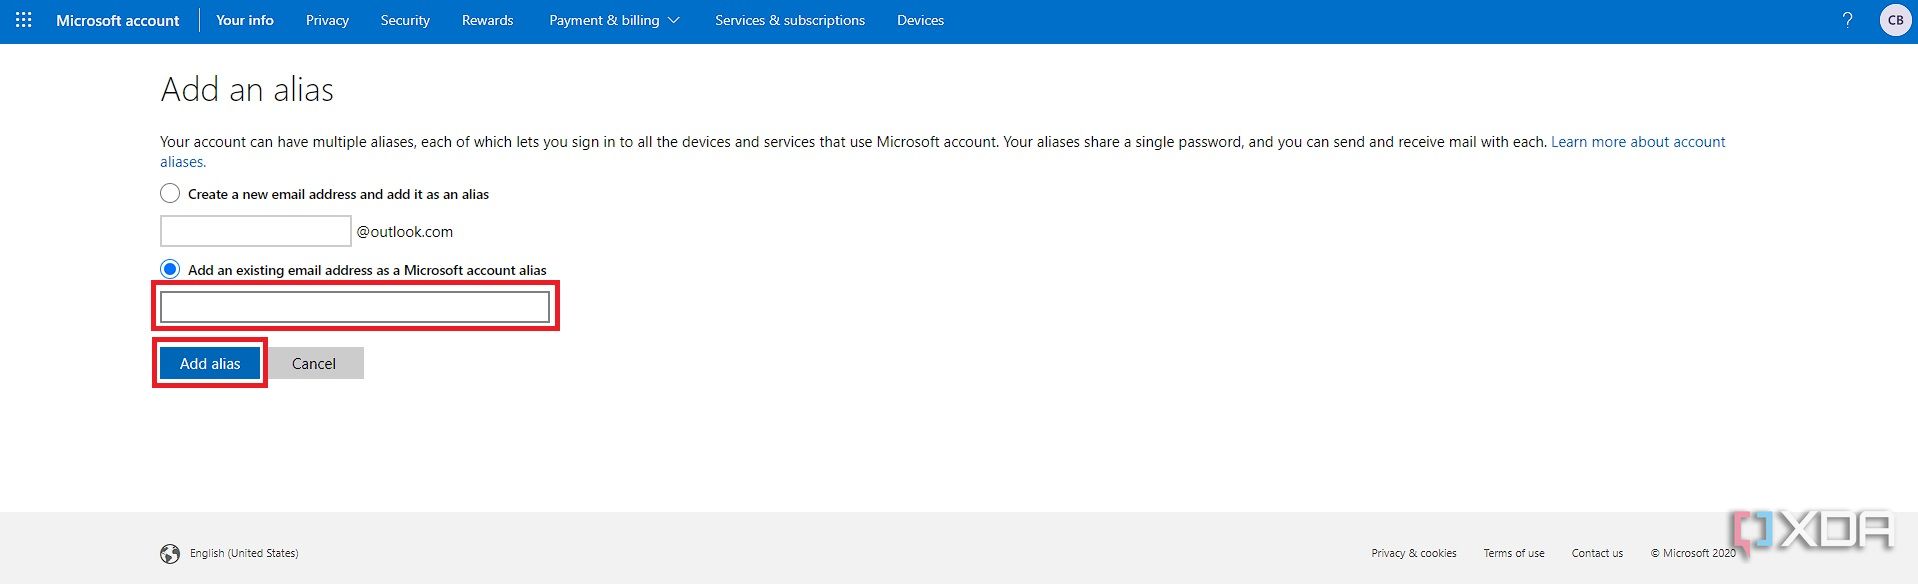 Add an alias email address to Microsoft account